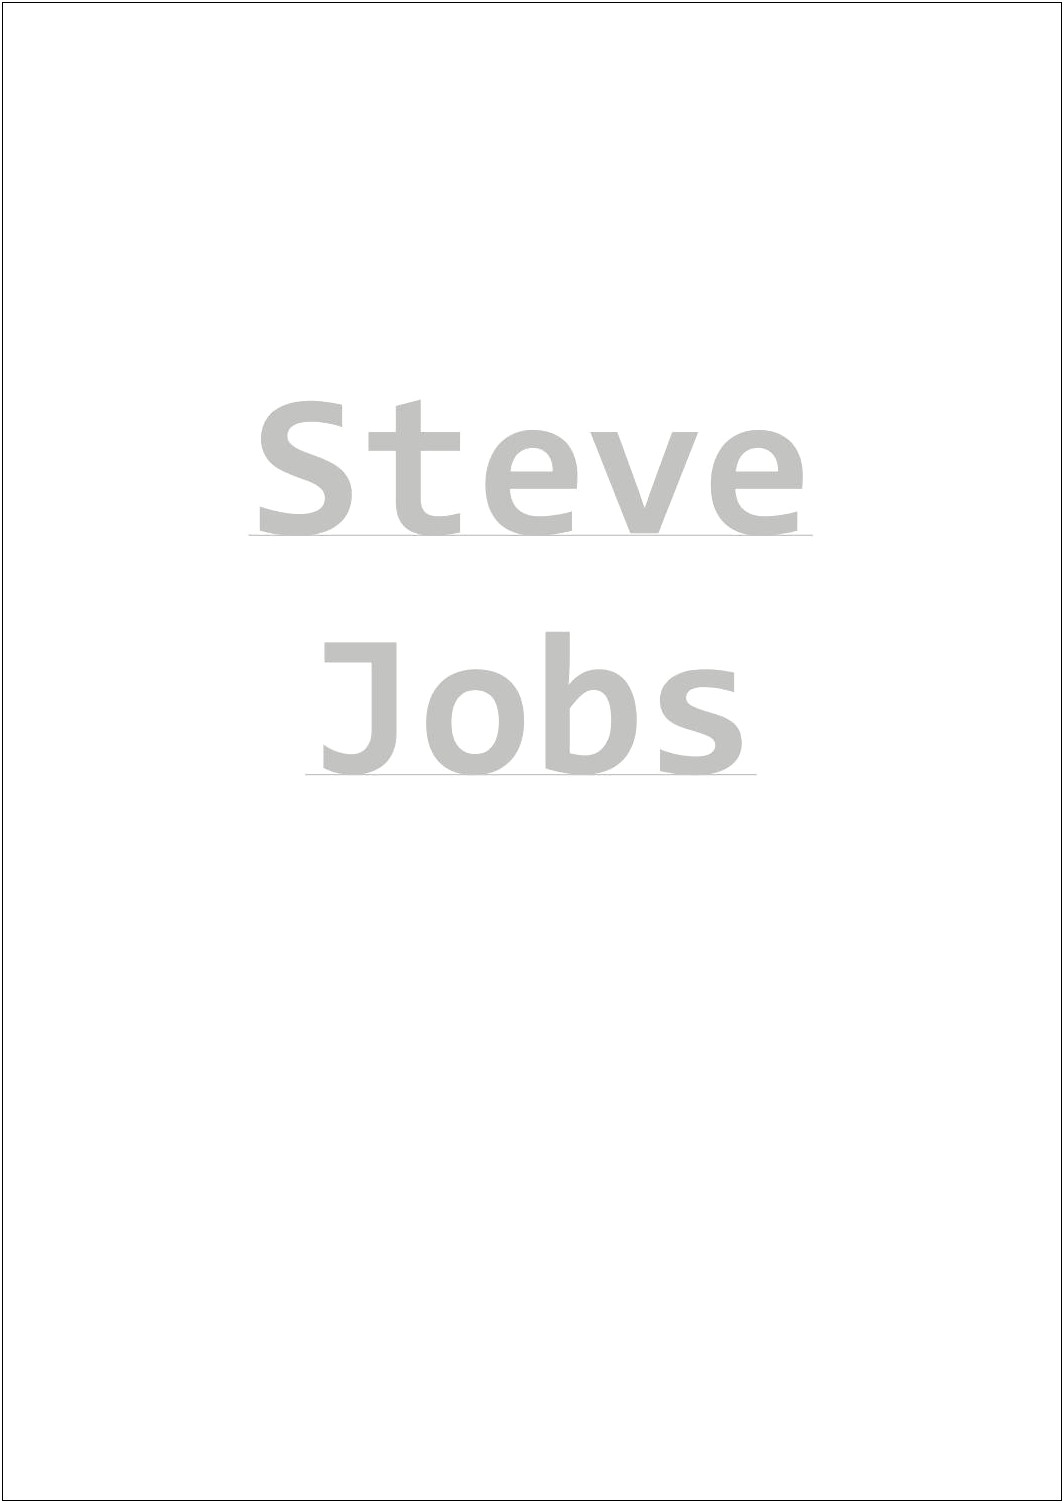 Steve Jobs Biografia Resumida Yahoo